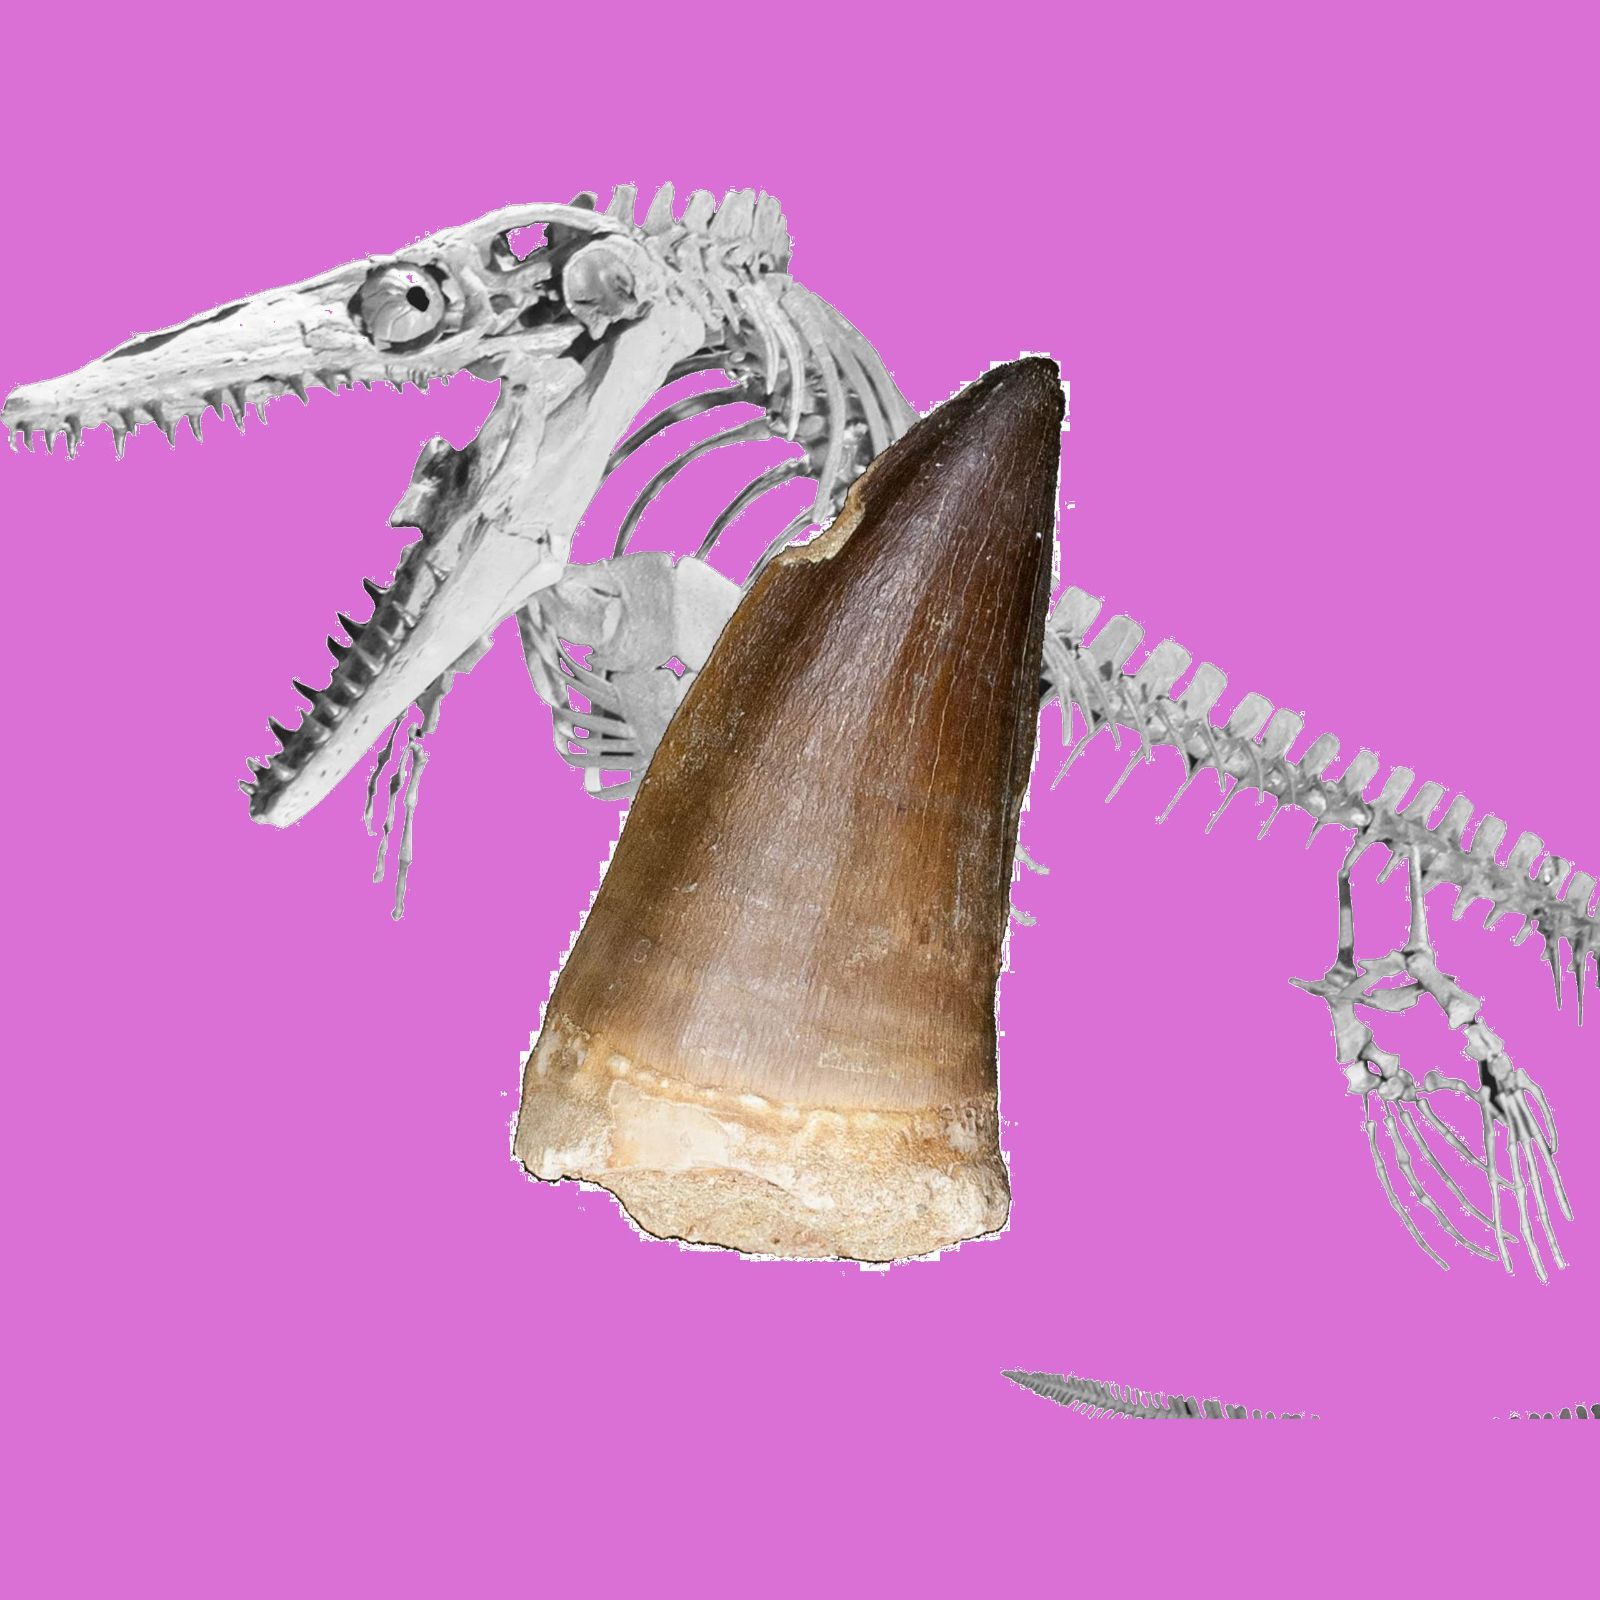 SCIENCE 恐竜の化石「モササウルスの歯 化石 約20mm（Mosasaurus tooth 